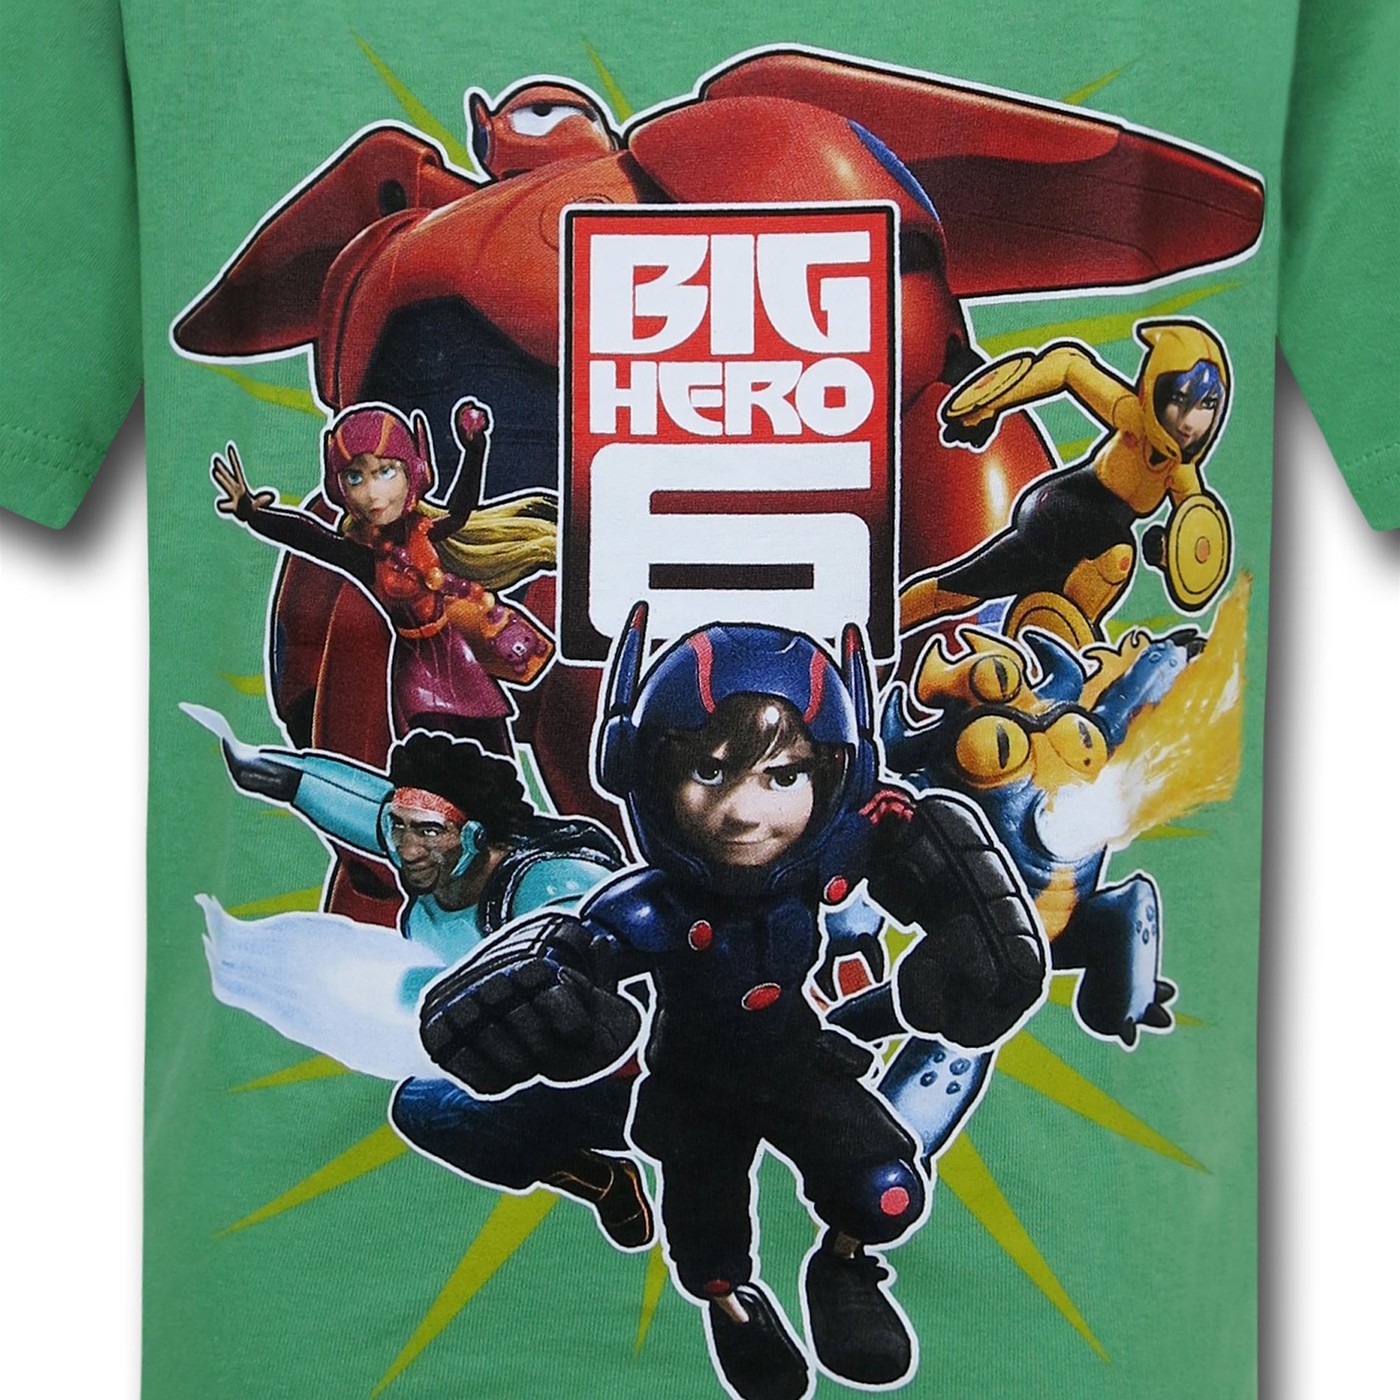 Big Hero 6 Green Kids T-Shirt